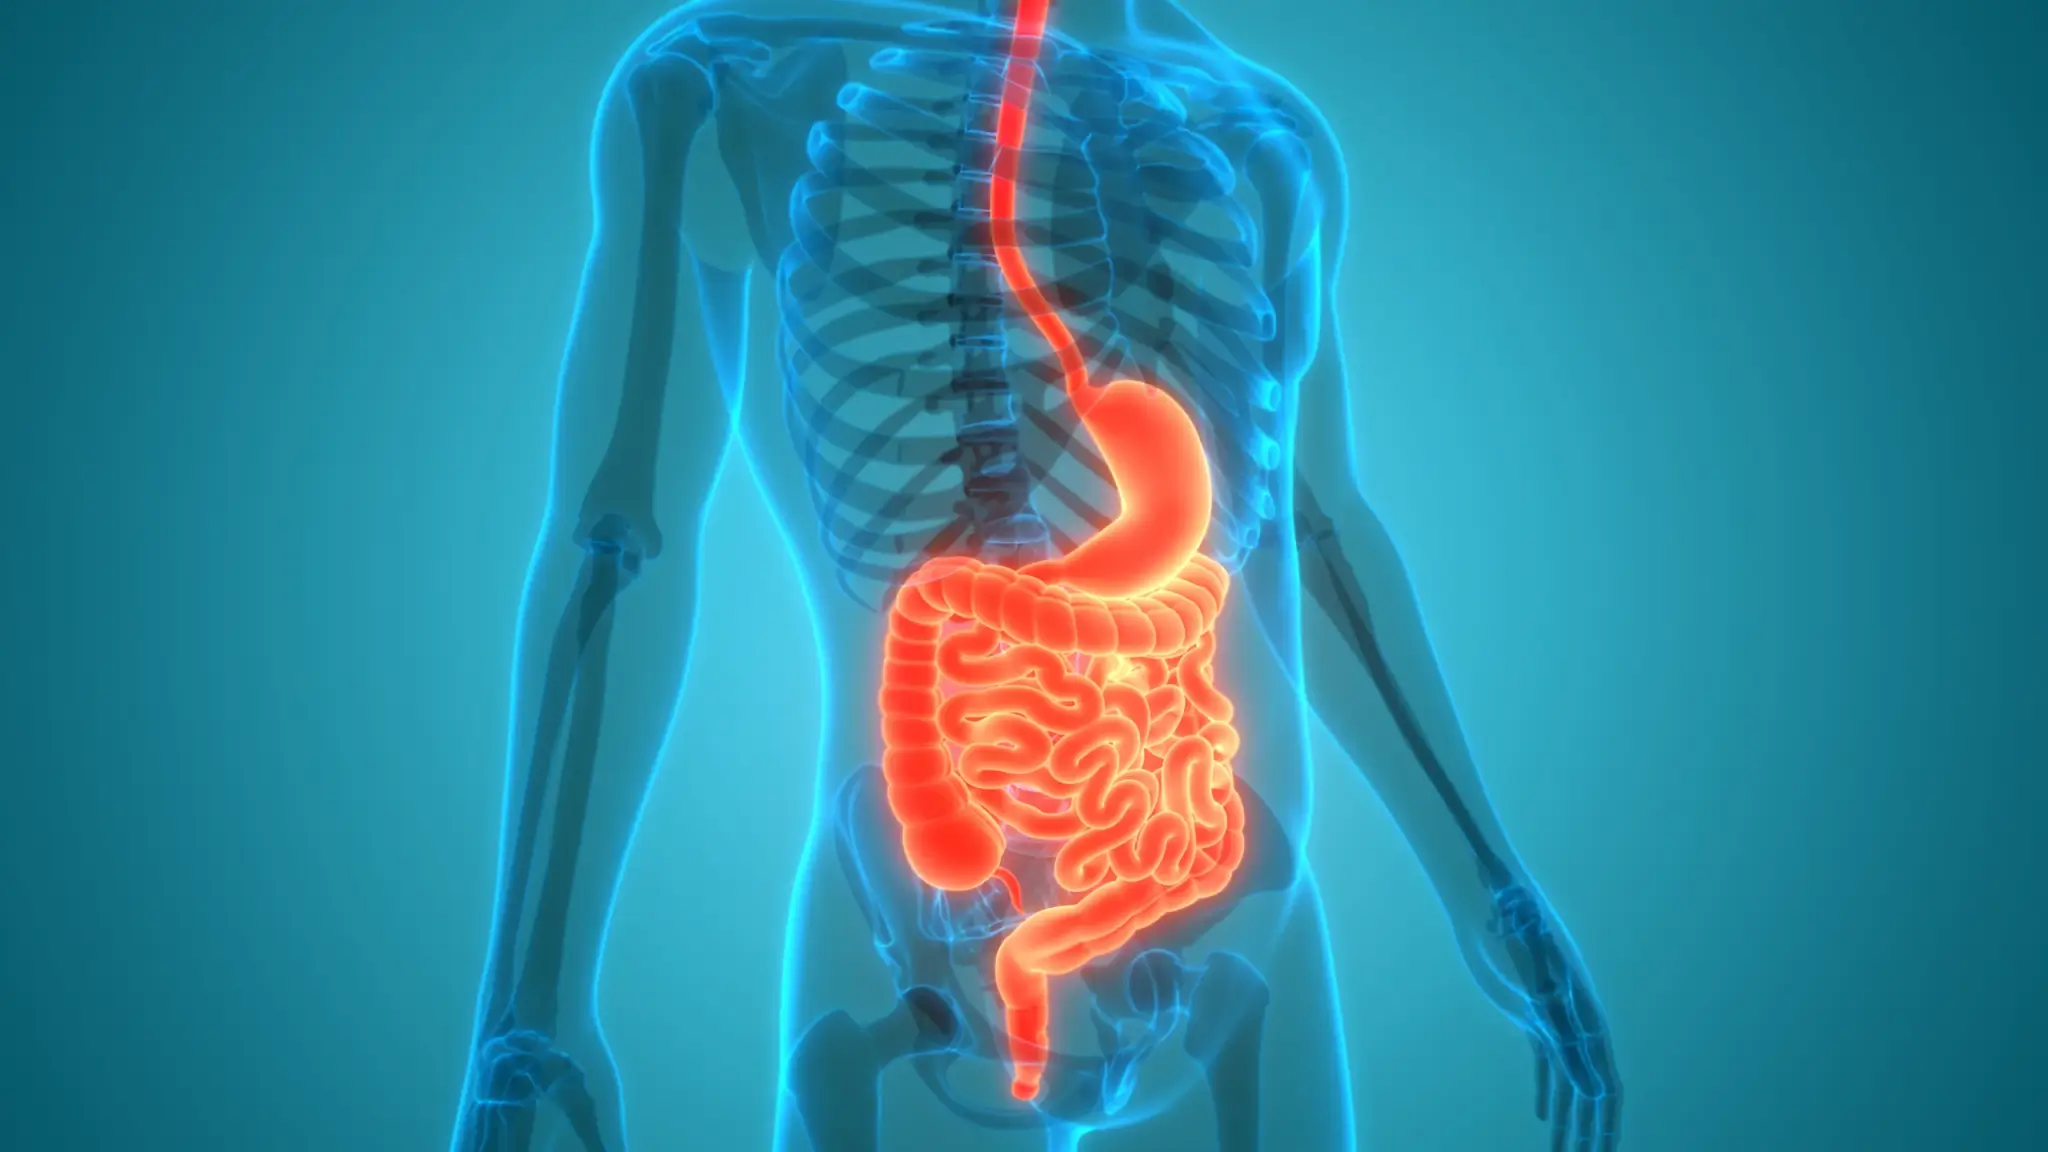 Digestive Disorders chrons, celiac, and IBS